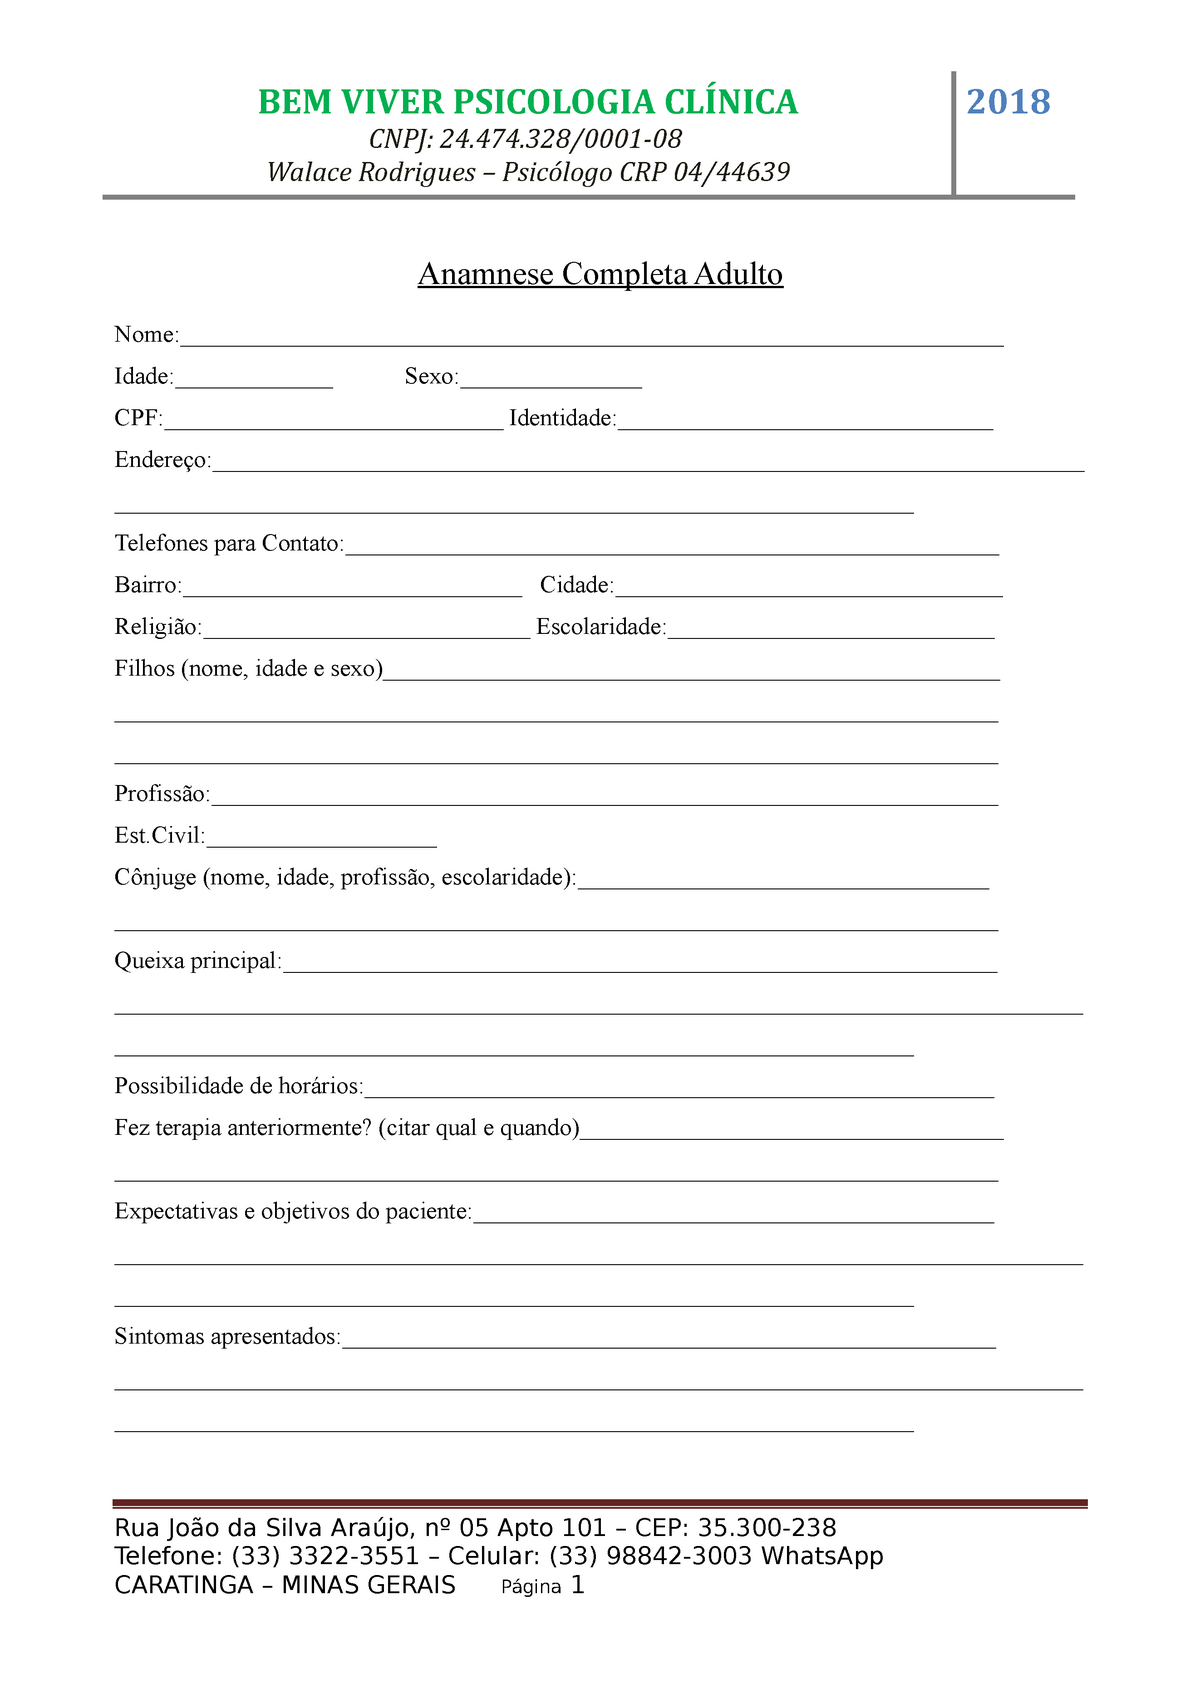 Anamnese Completa Adulto, PDF, Relação sexual